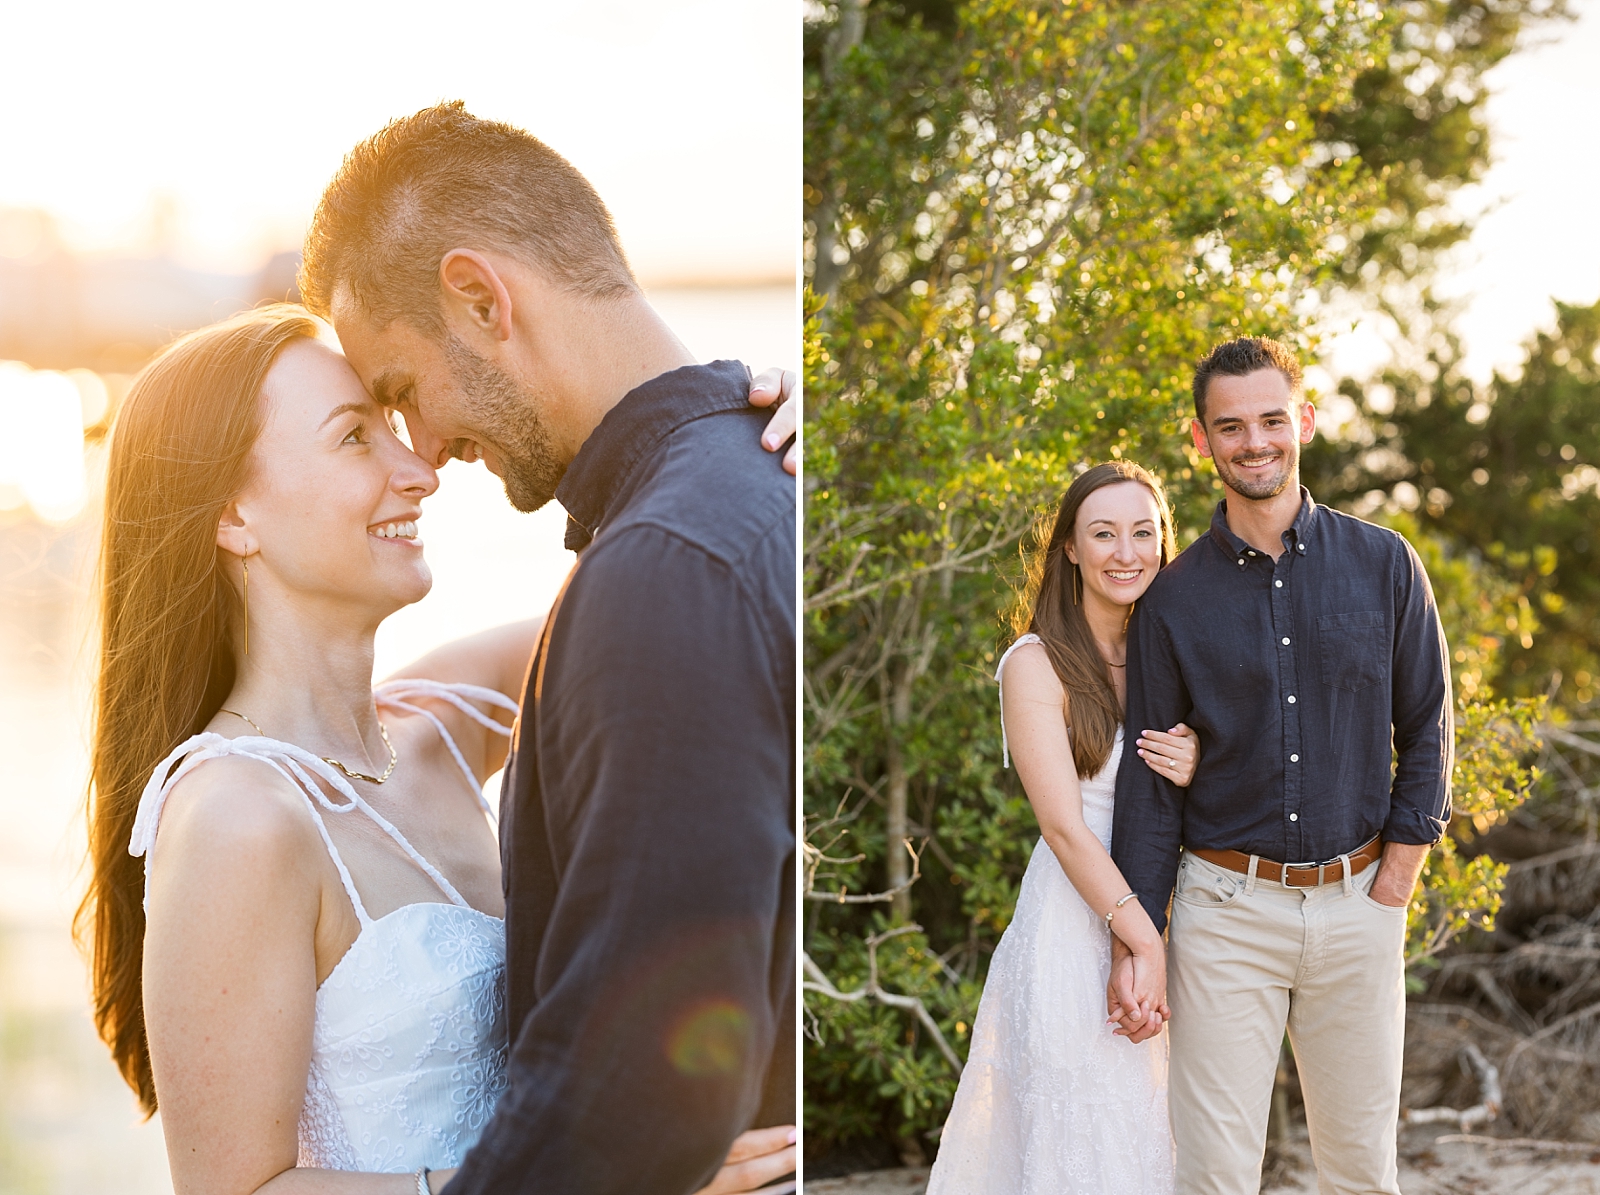 Engagement photos at Topsail Beach | Raleigh North Carolina Wedding Photographer